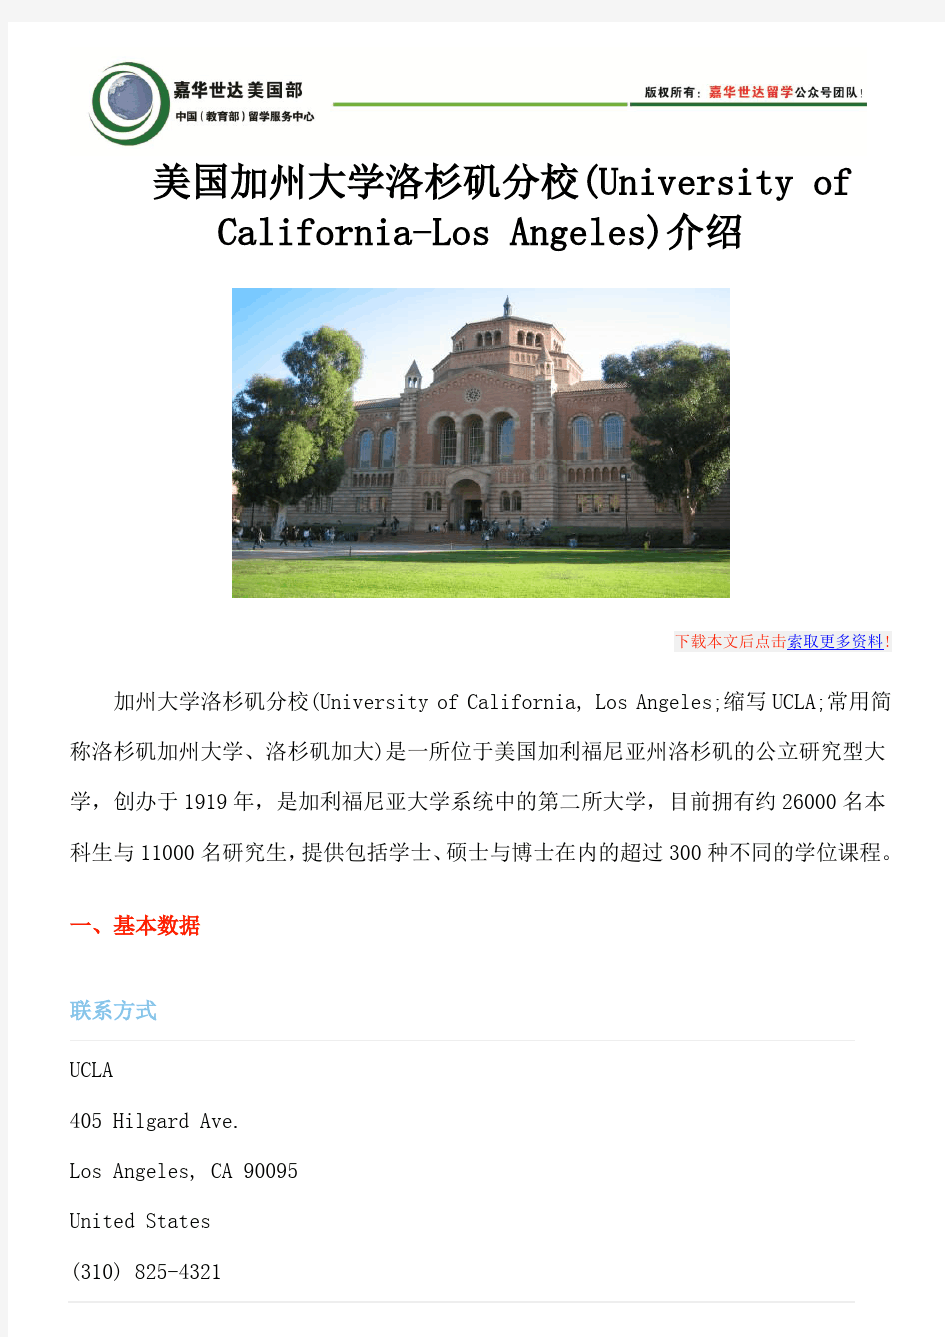 美国加州大学洛杉矶分校(University of California-Los Angeles)介绍